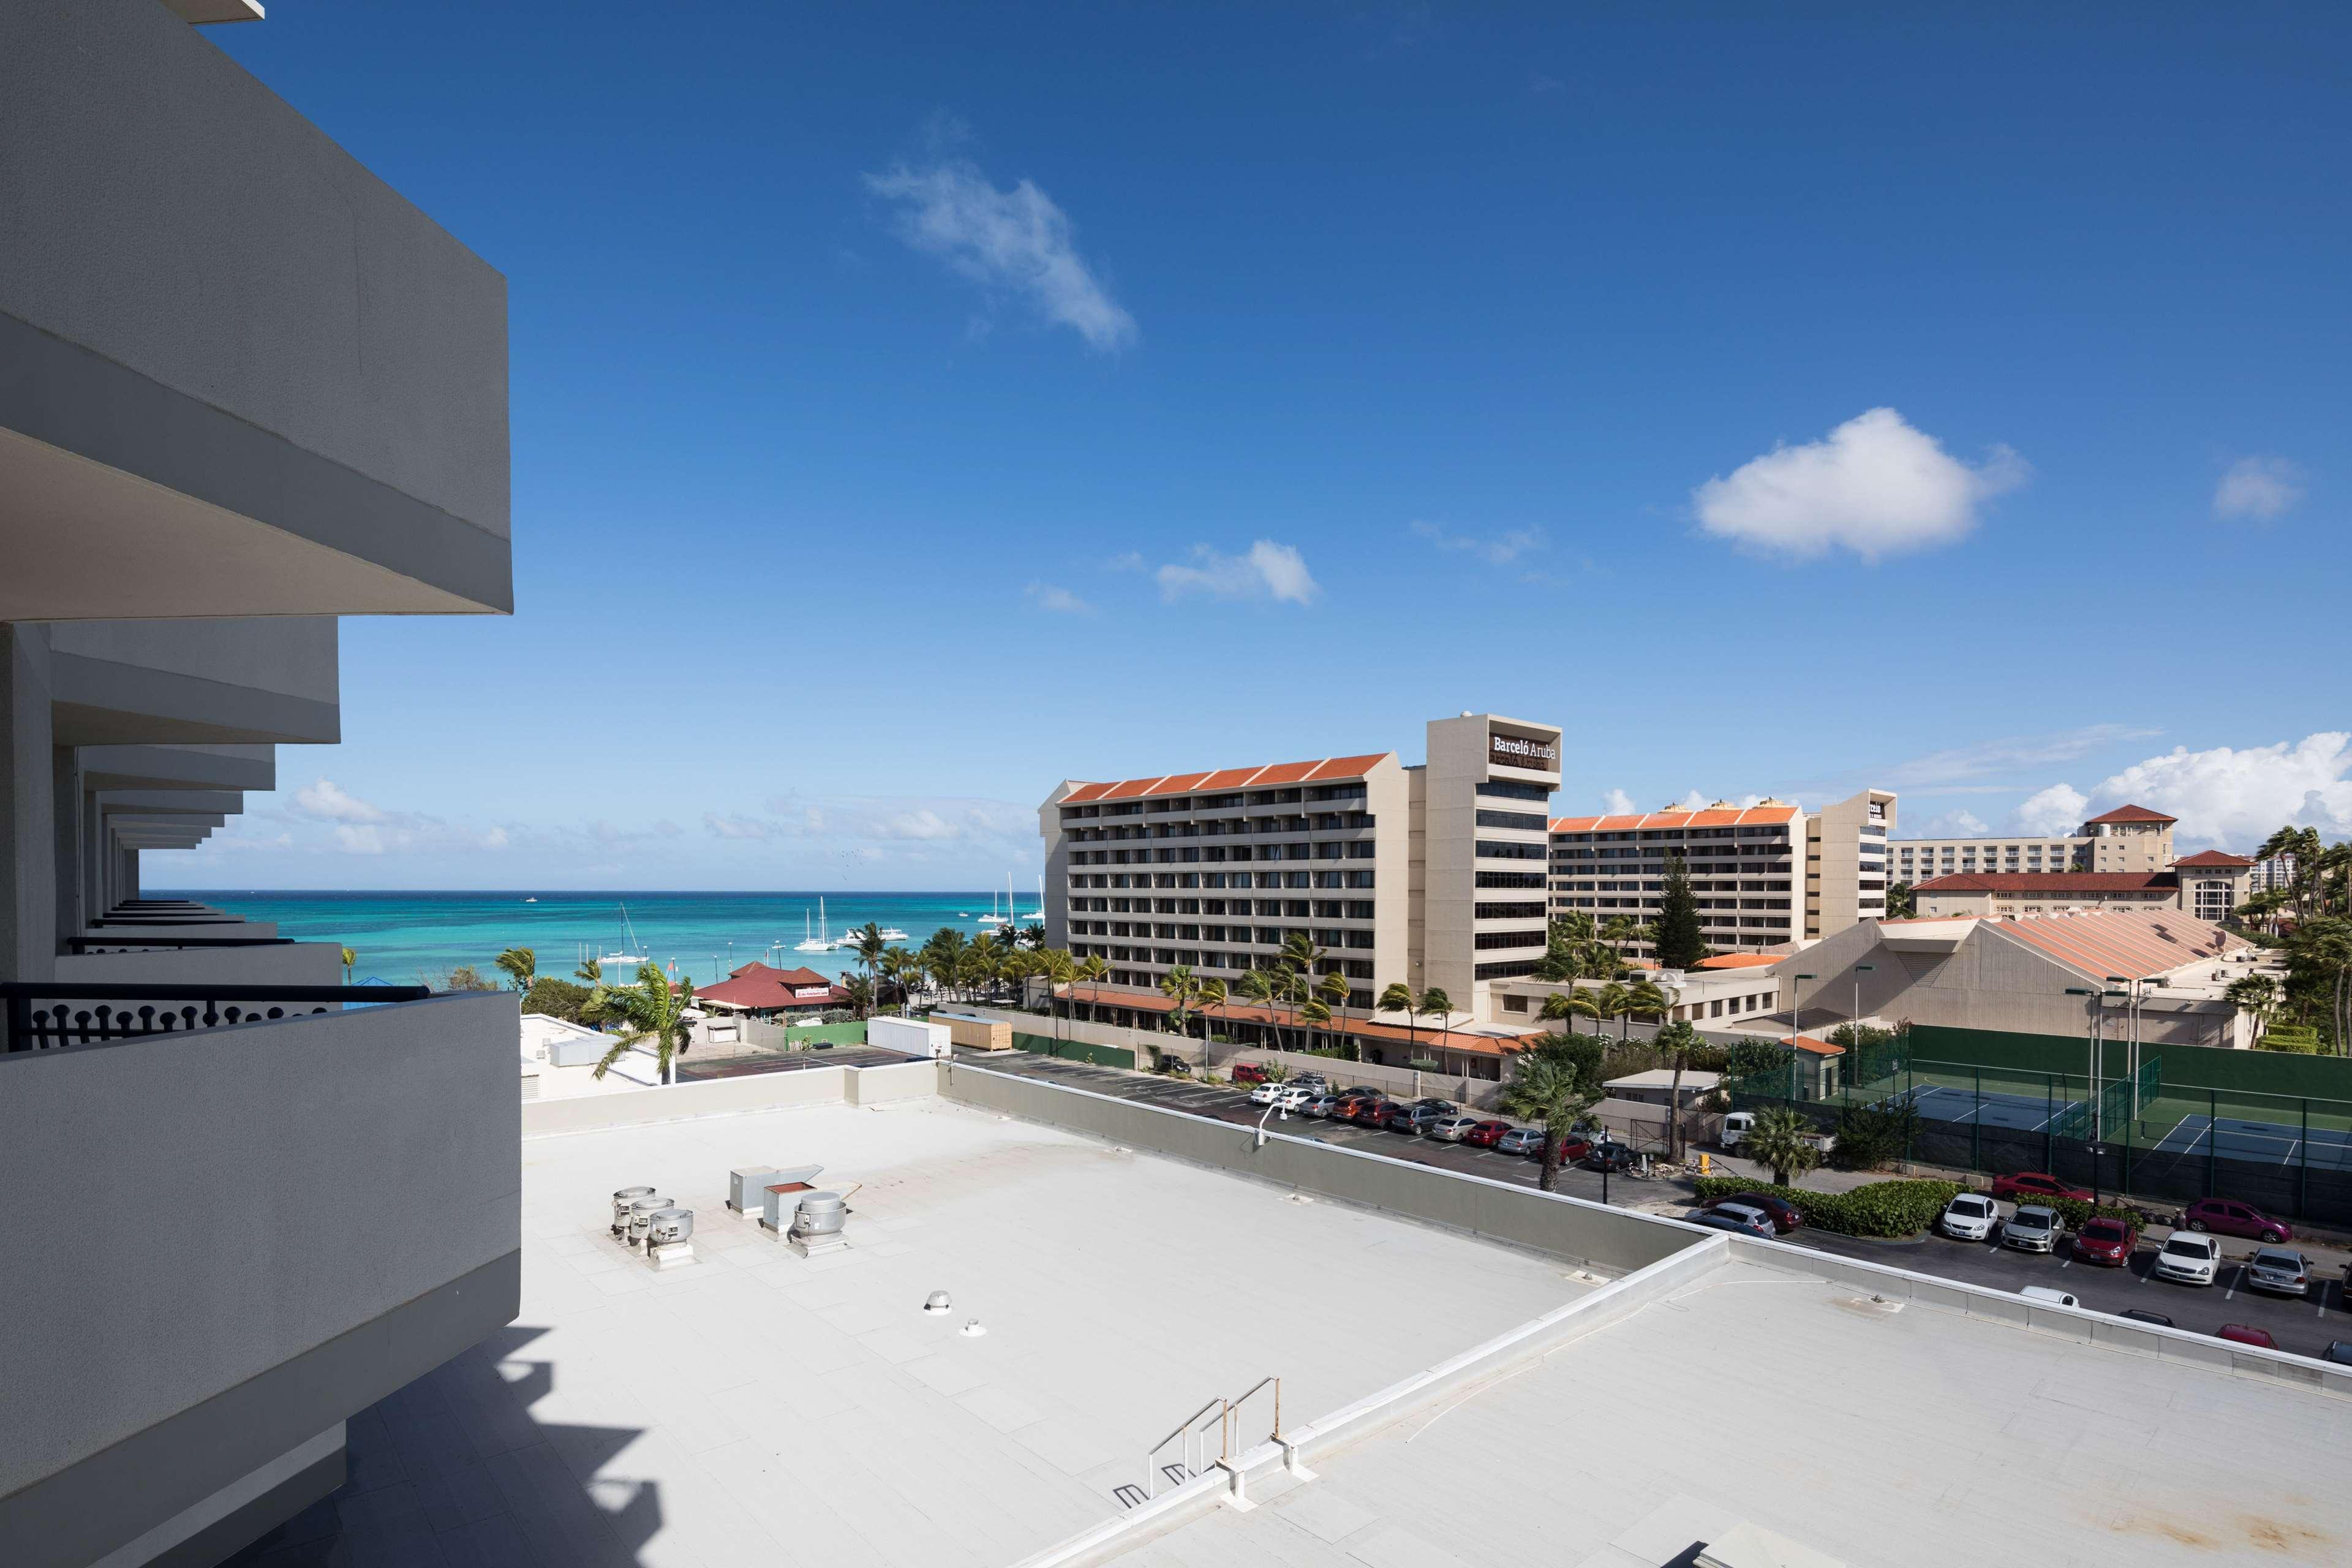 Hilton Aruba Caribbean Resort & Casino image